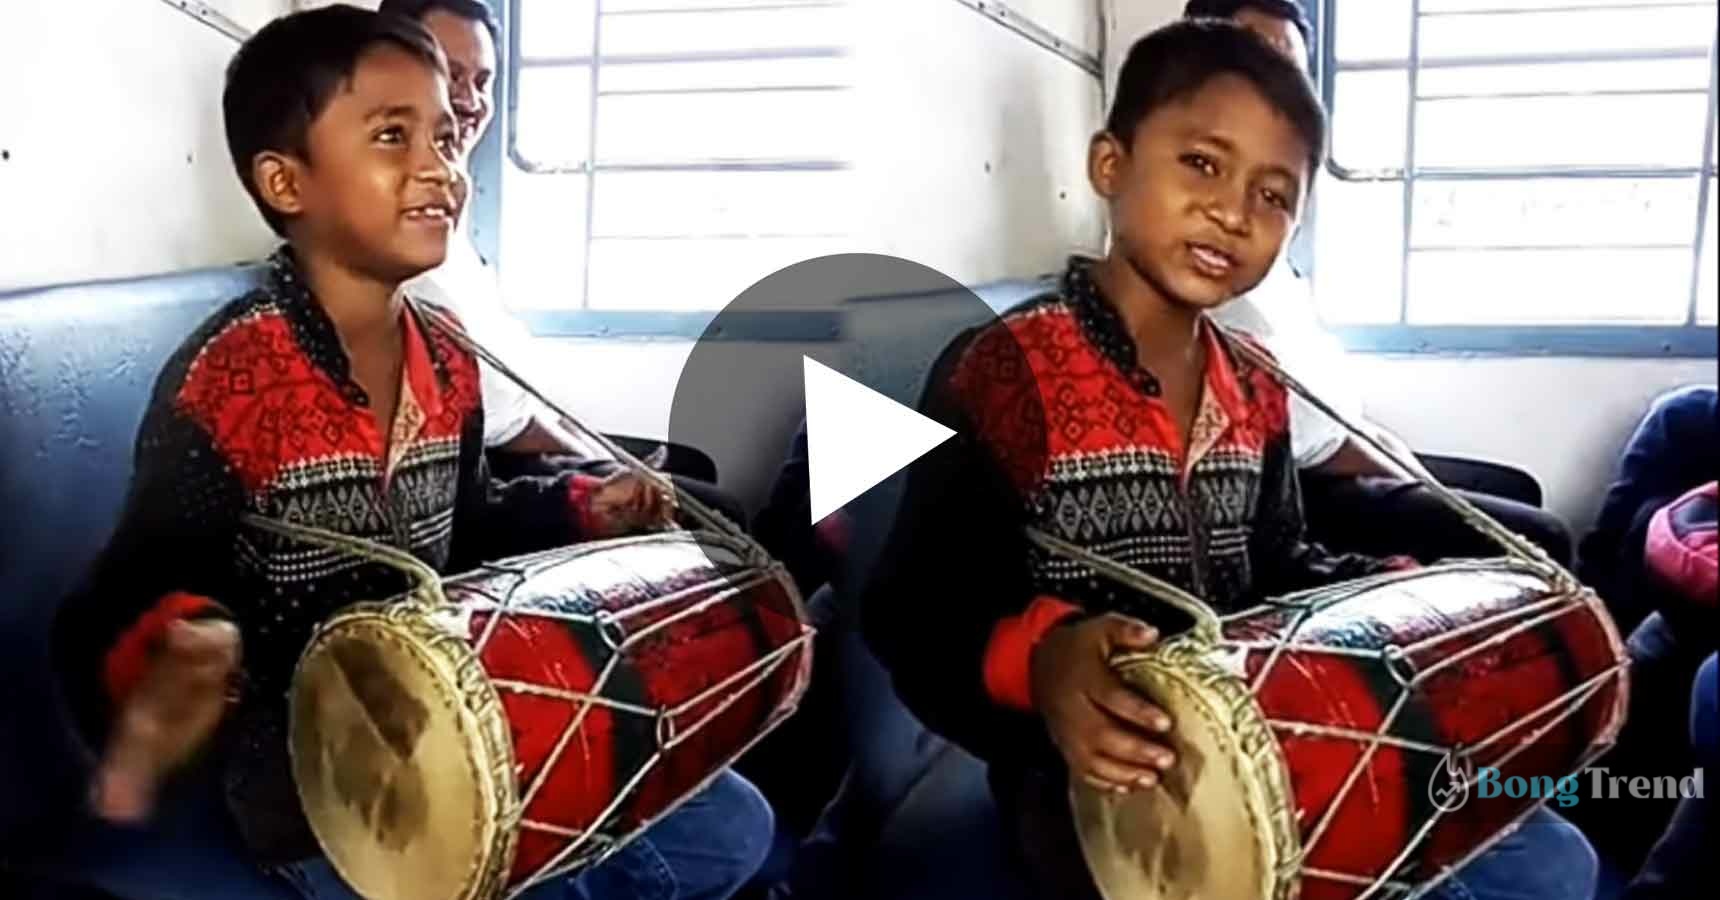 Little Boy singing on train viral video